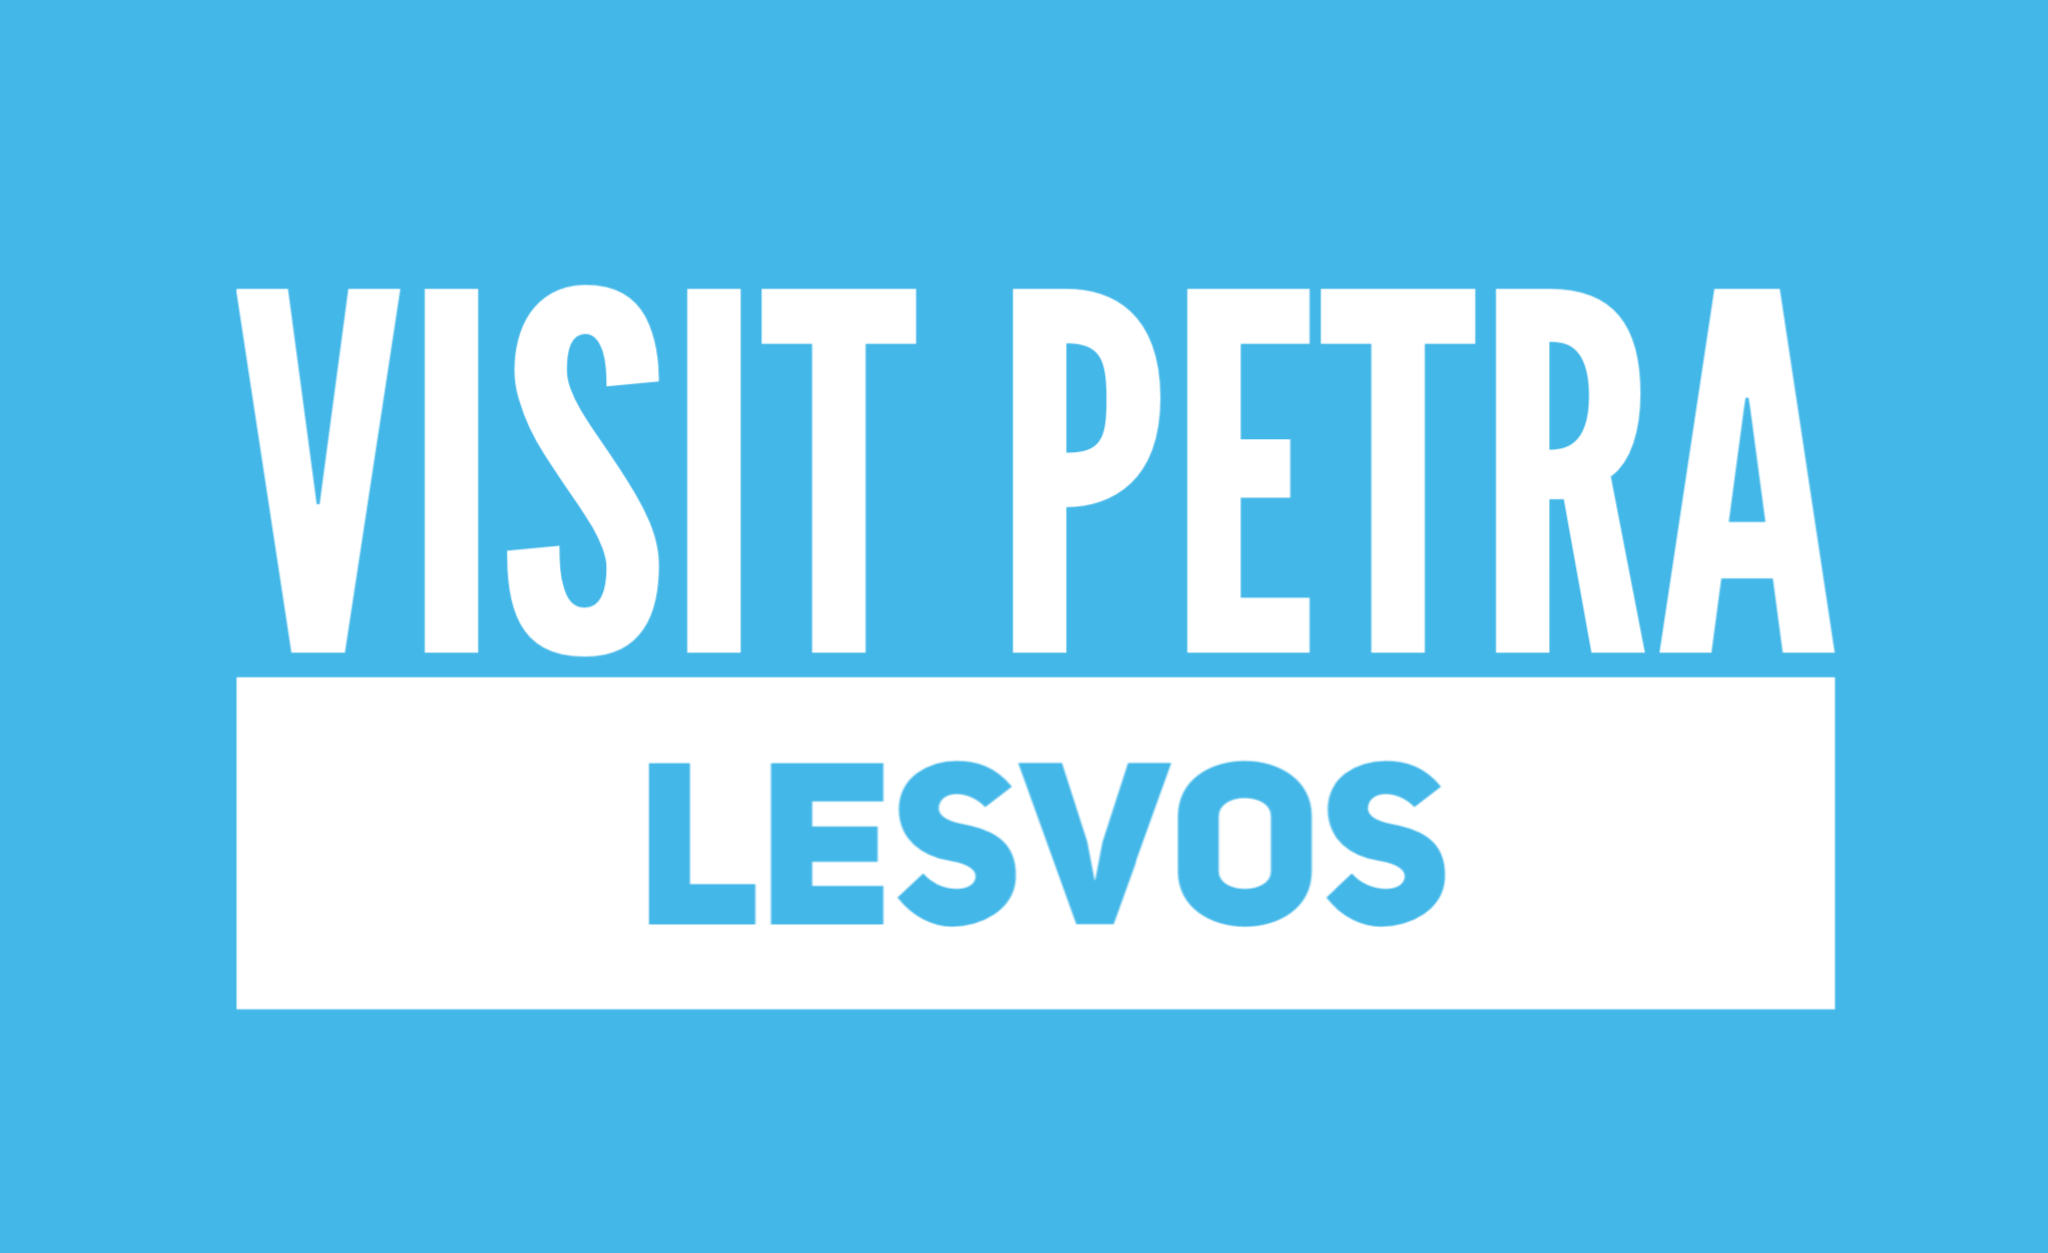 Visit PETRA - LESVOS